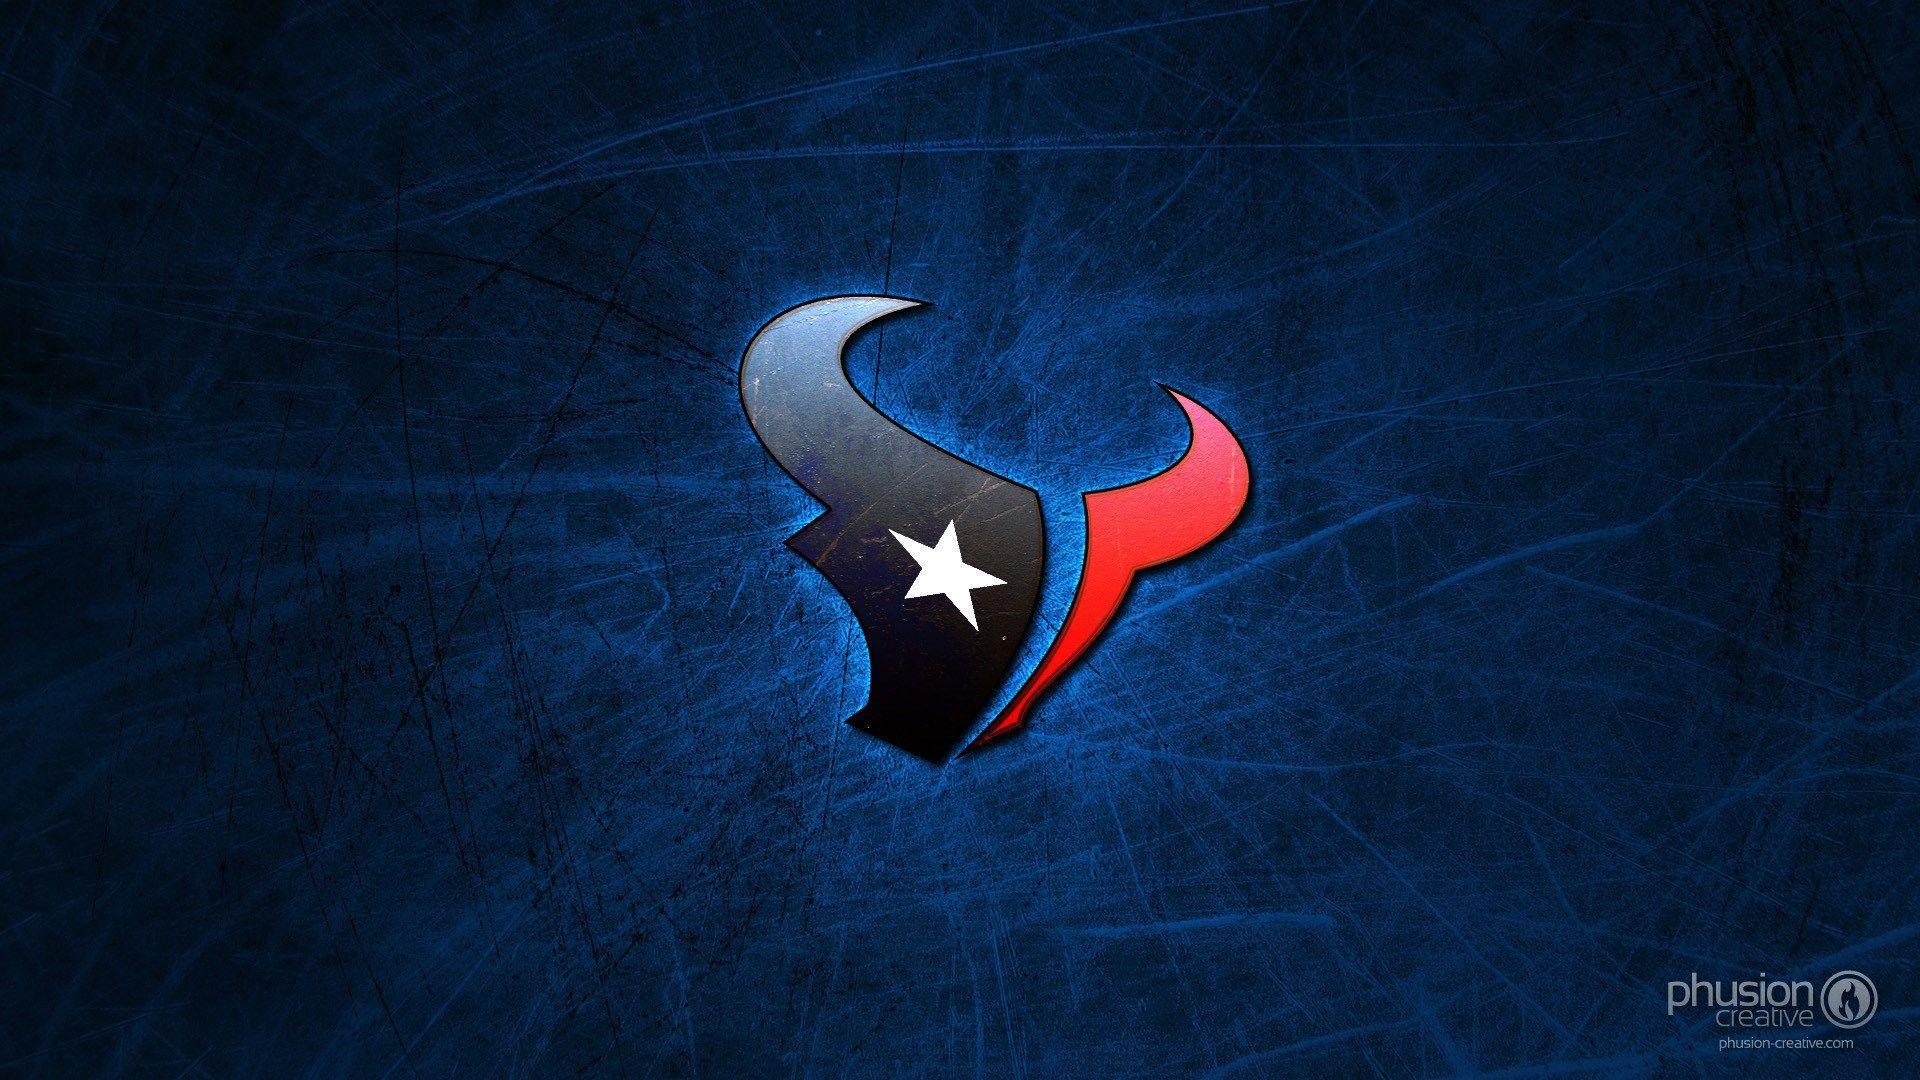 Houston Texans Wallpaper To Download By Kurt Smith (2017 03 19)